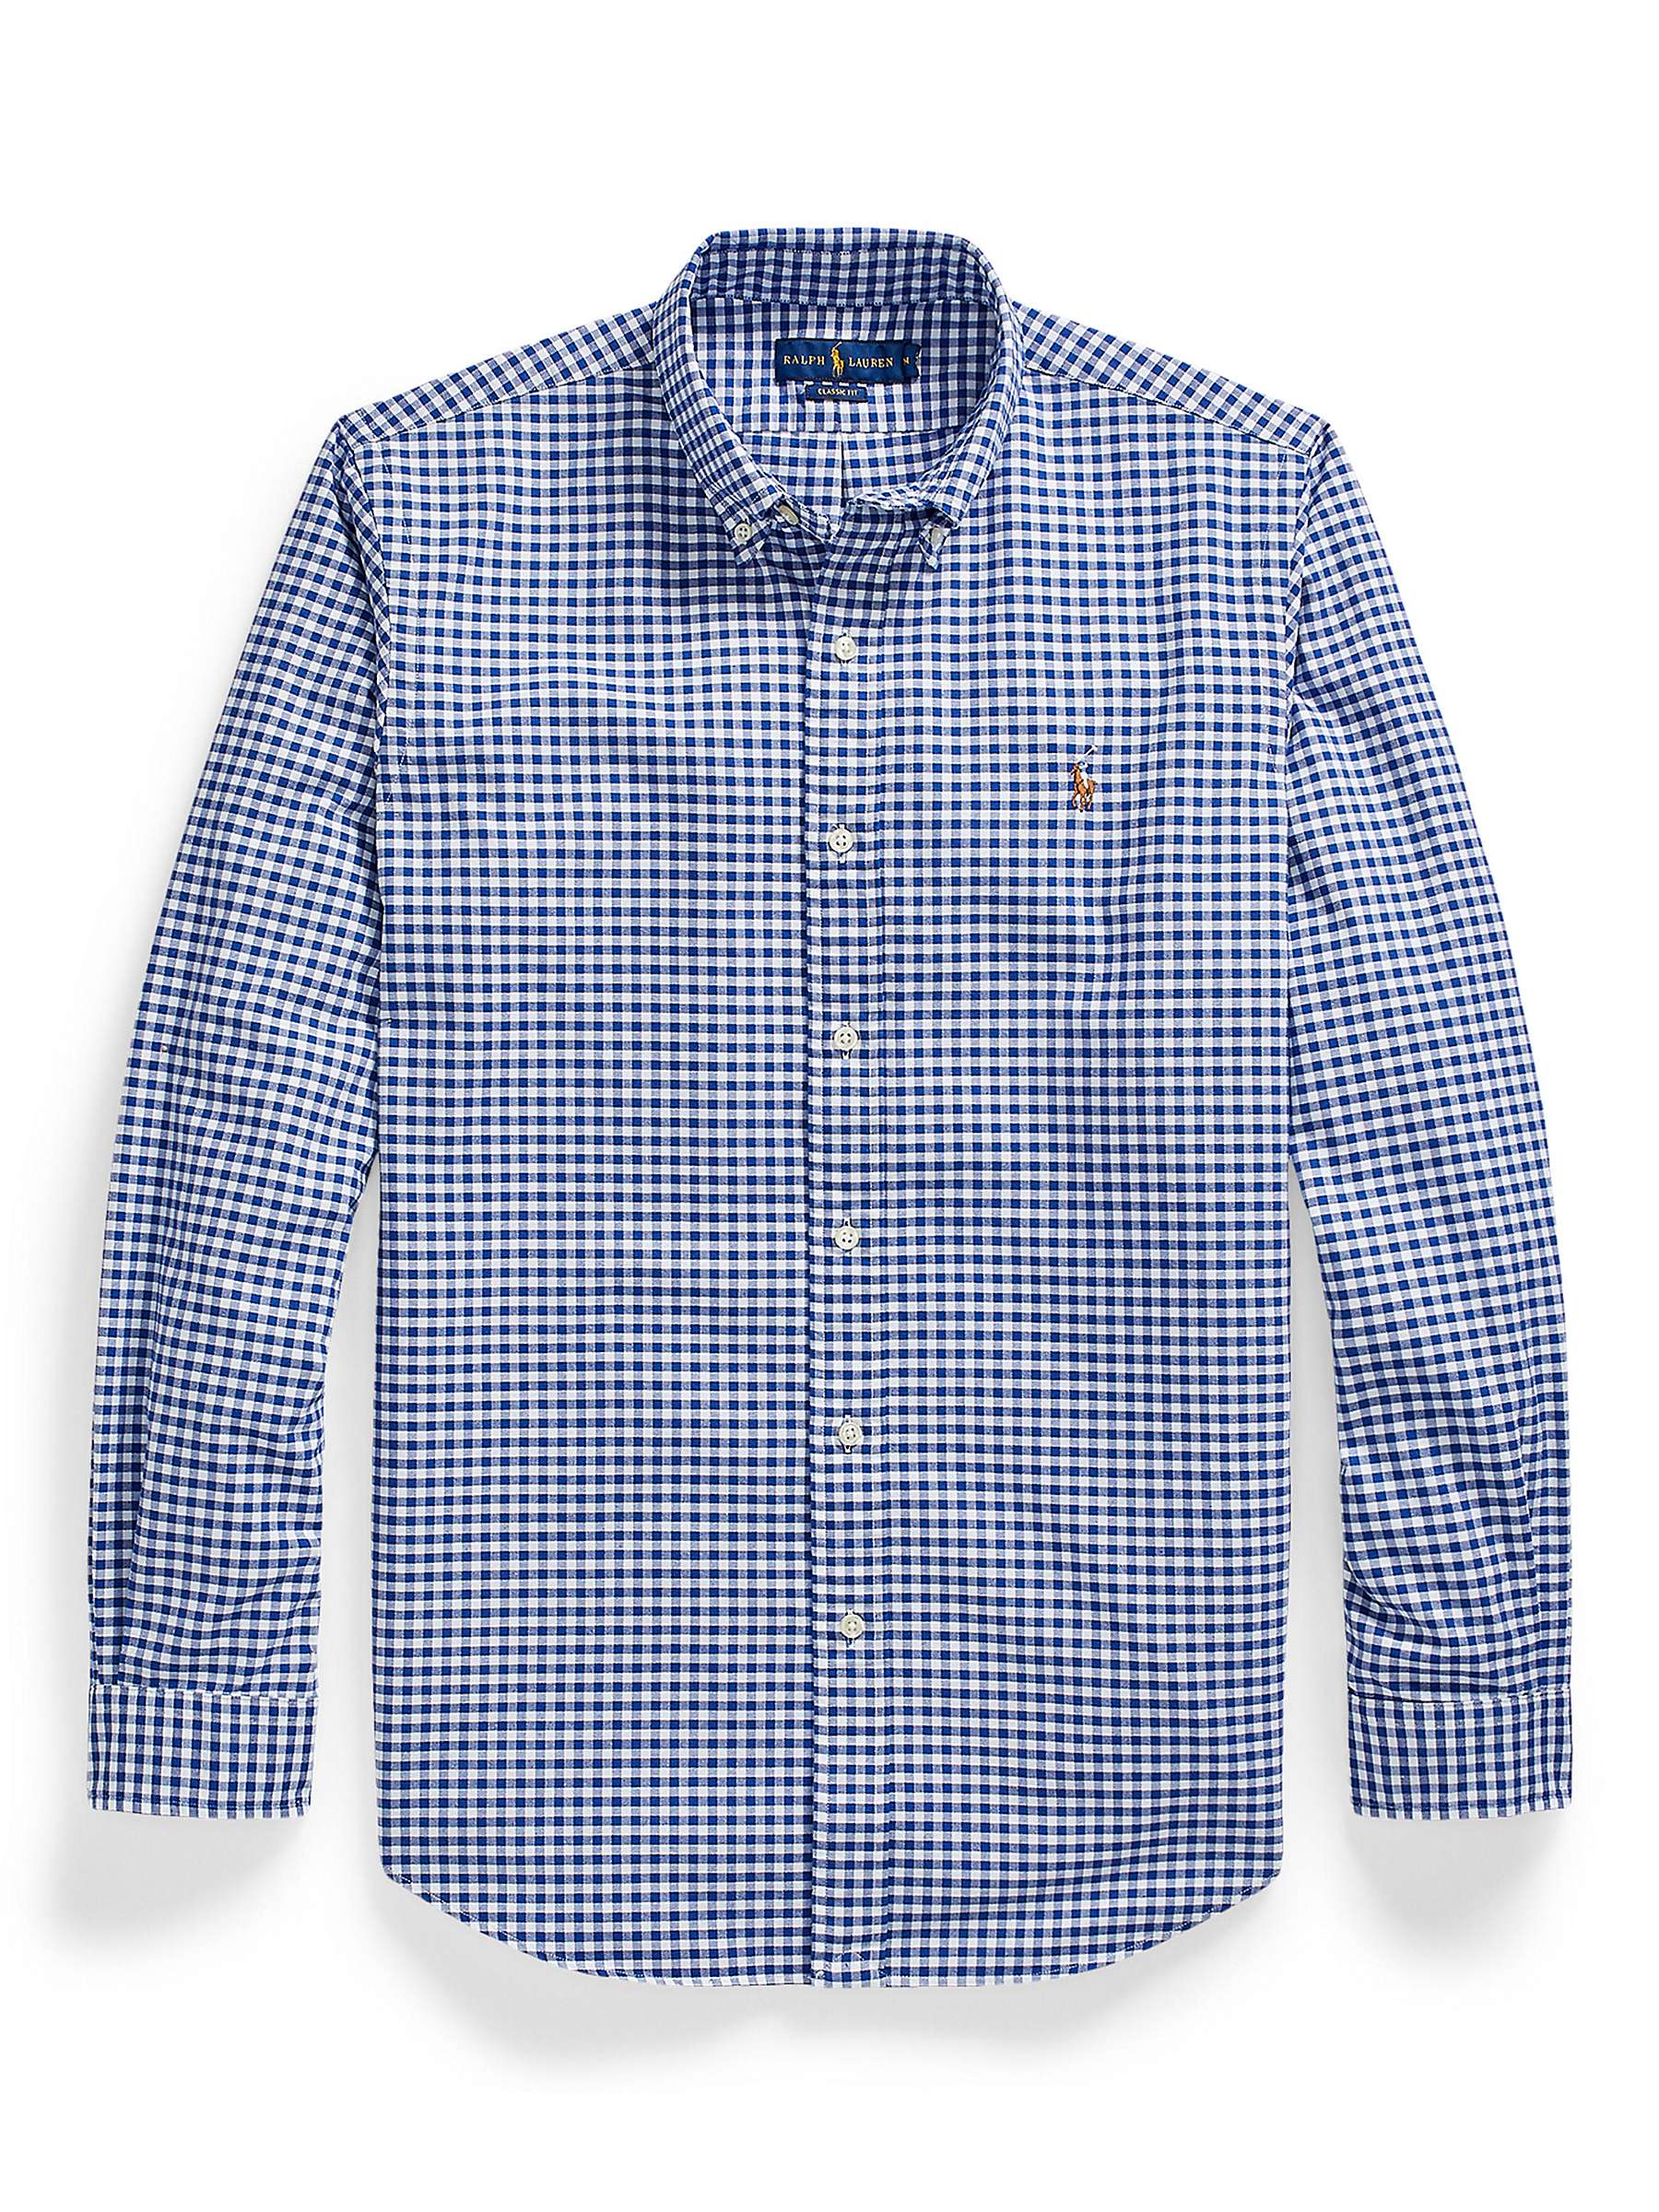 Buy Polo Ralph Lauren Custom Fit Oxford Shirt, Gingham Blue / White Online at johnlewis.com